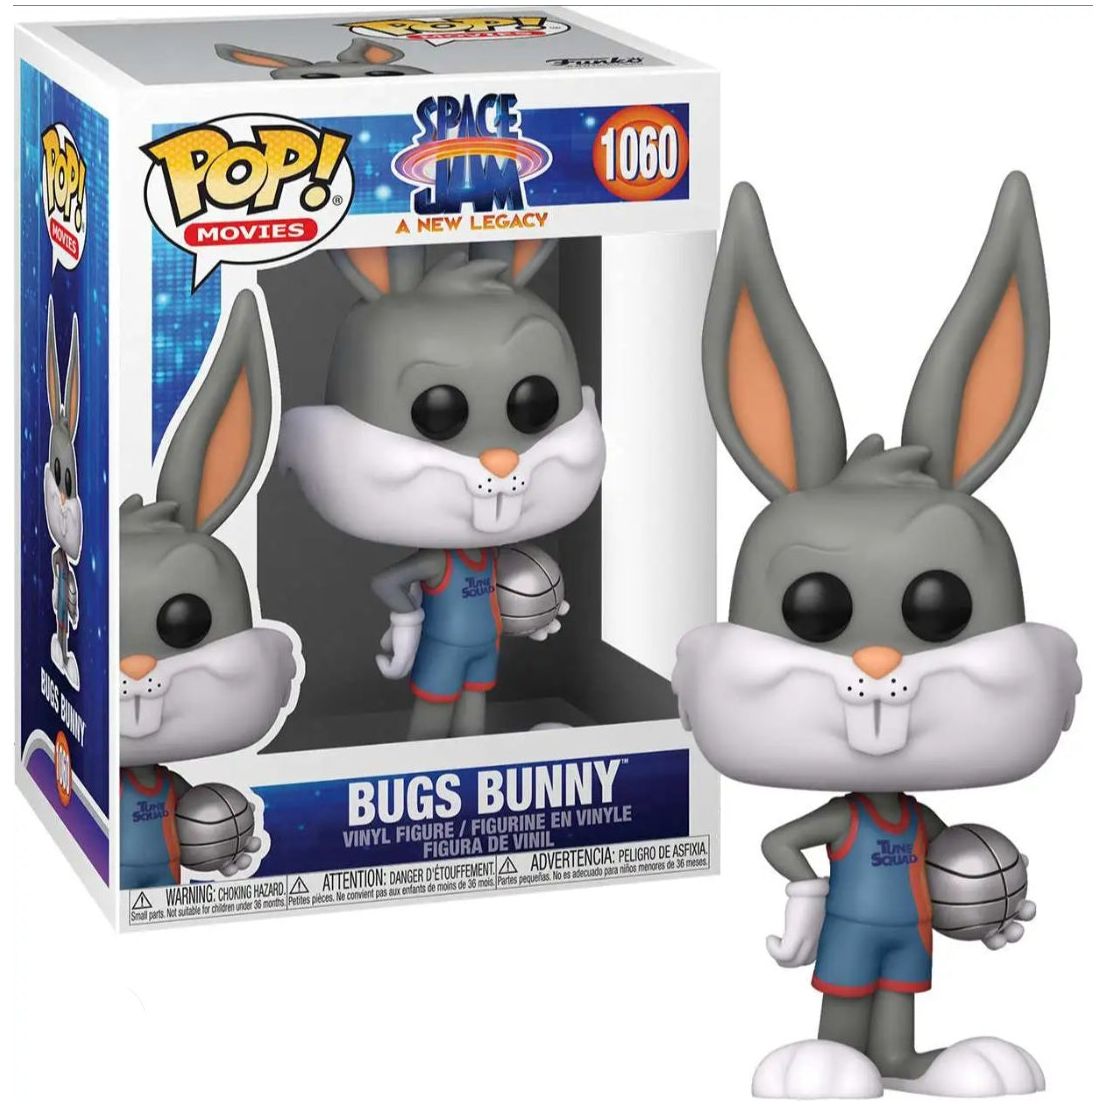 Bugs Bunny Funko POP - Space Jam - Movies #1060 - Partytoyz Inc